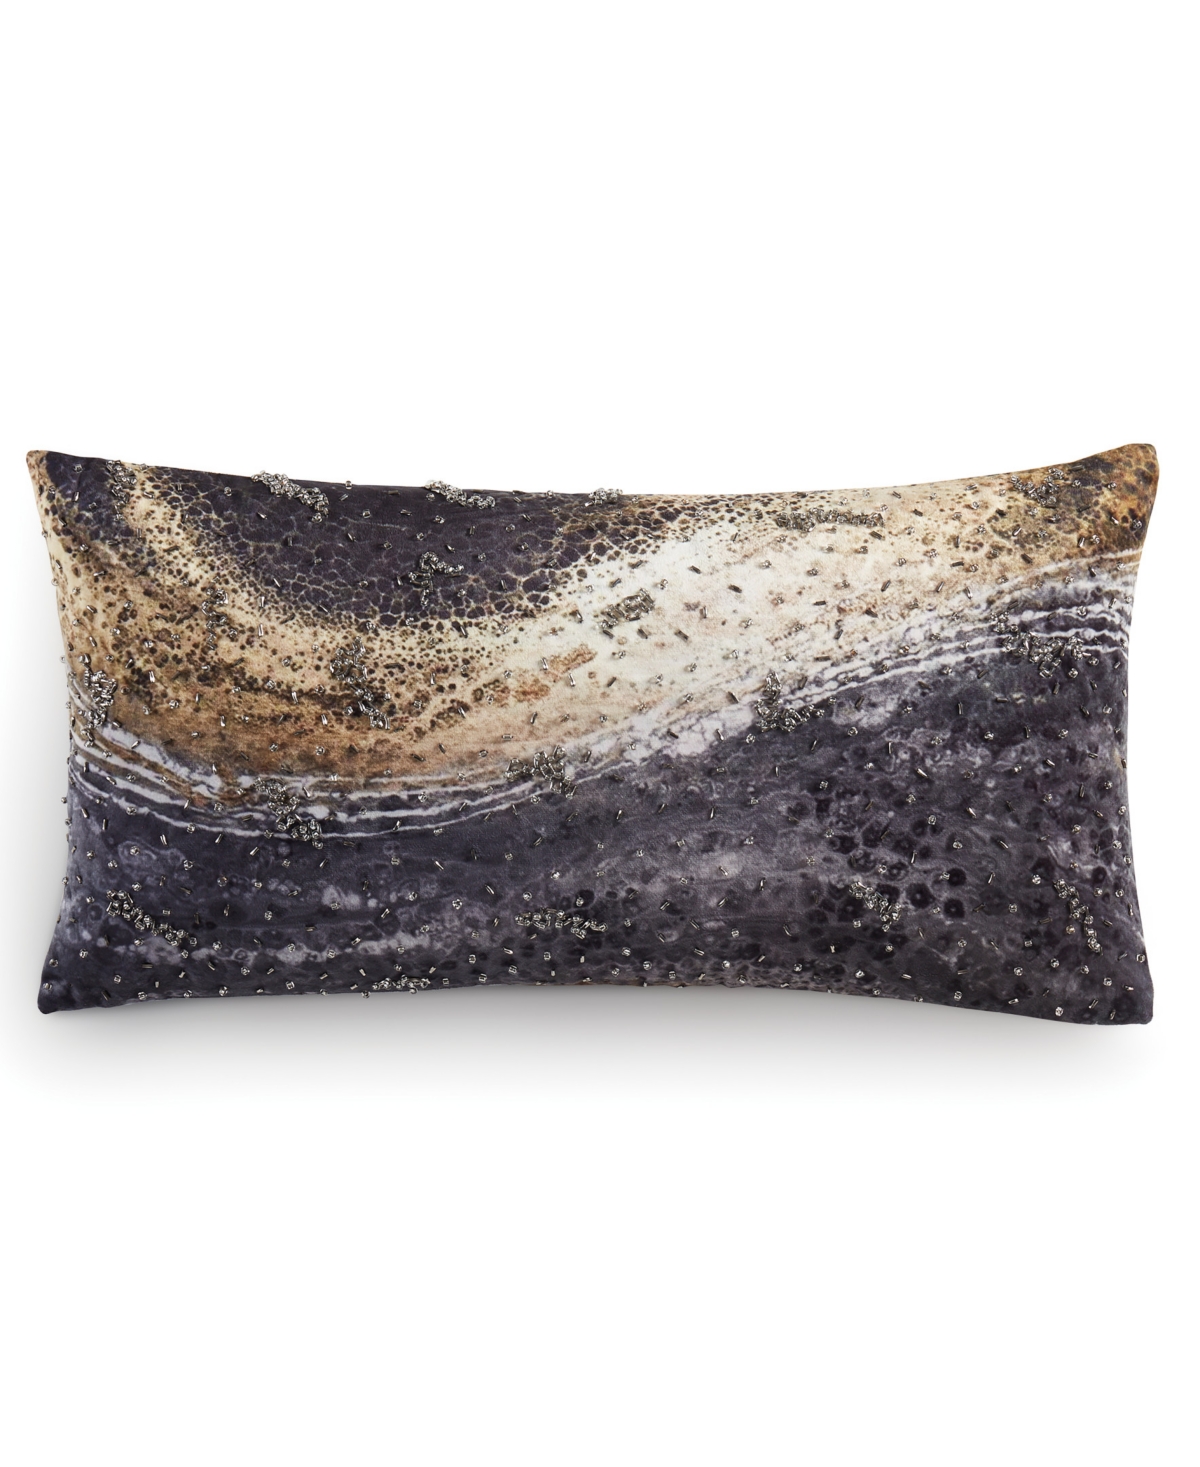 Donna Karan Home Galaxy Decorative Pillow, 11" X 22" In Charcoal